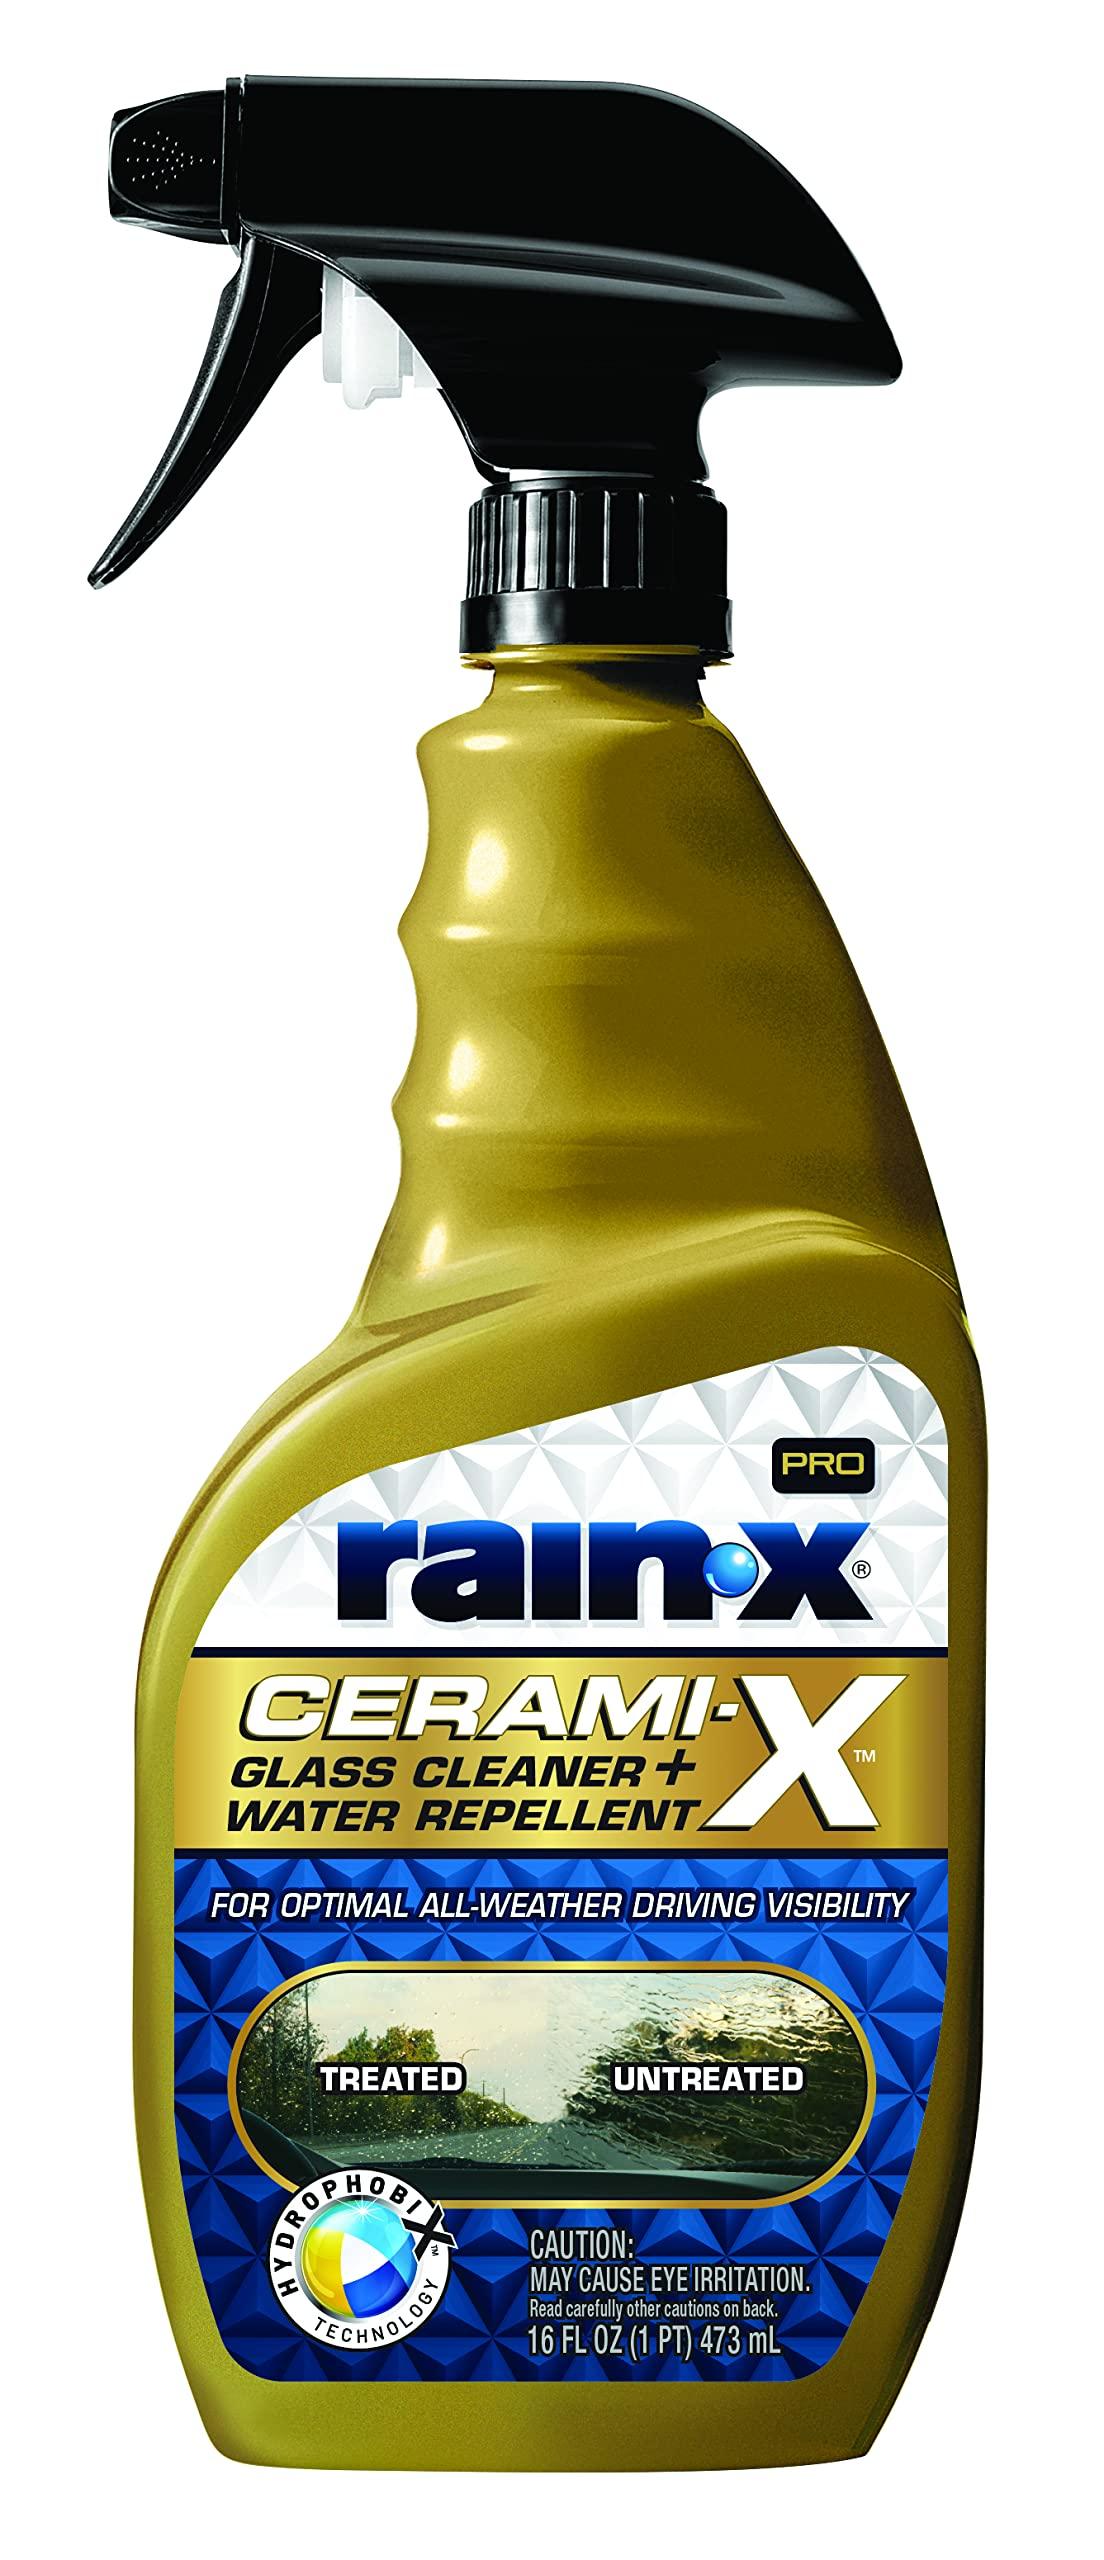 RAIN X Windscreen 2 in 1 Glass Cleaner & Rain Repellent Includes X2 CLOTHS